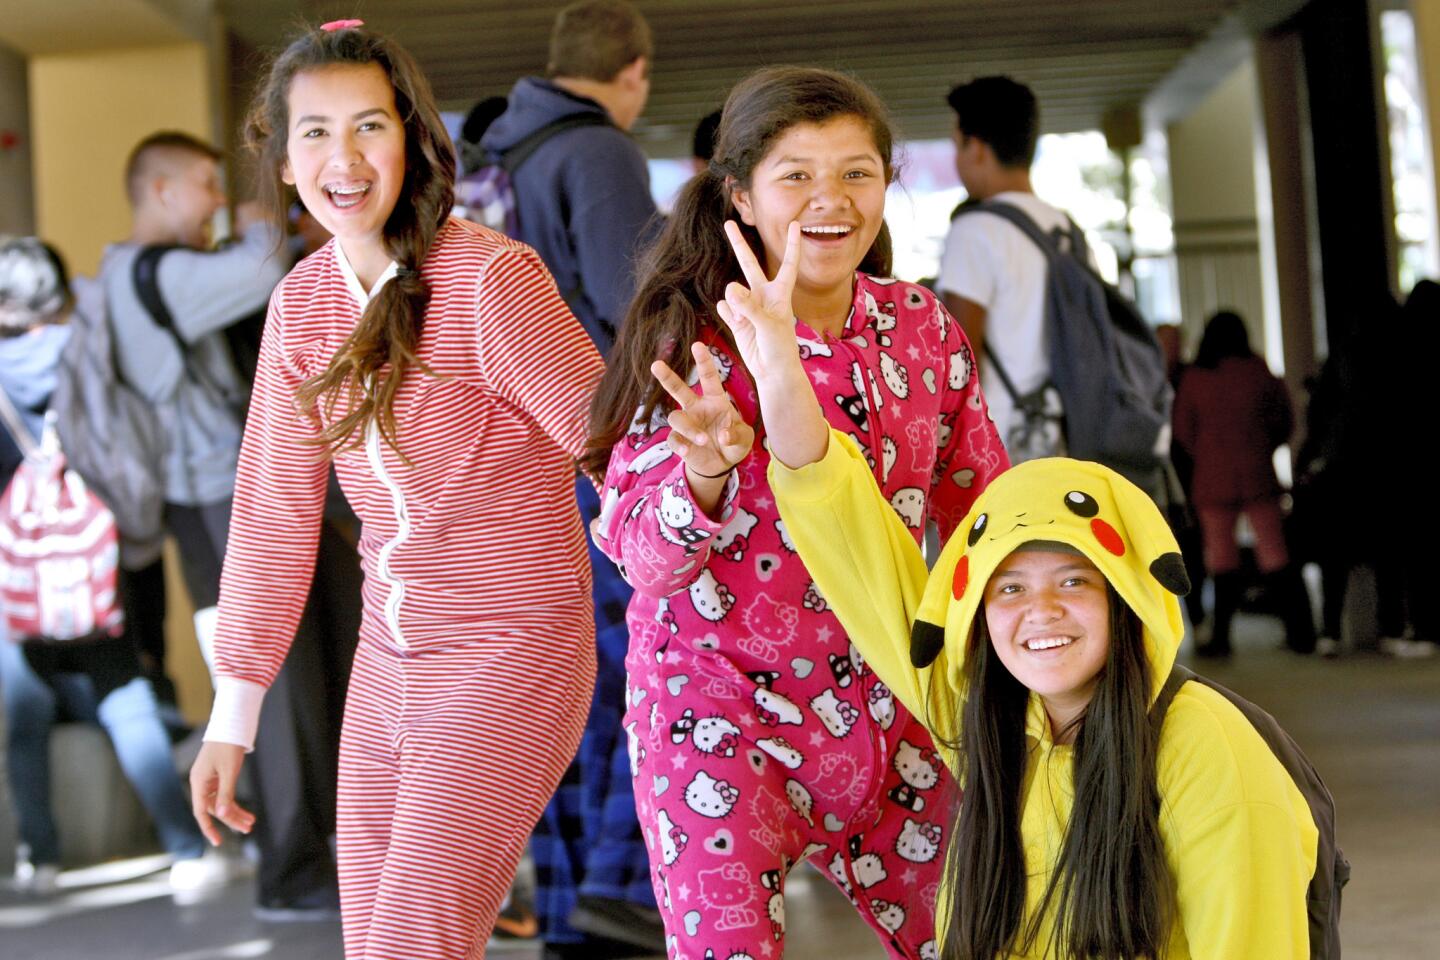 Freshmen girls Sarah Whittle, 14, left, Jazmin Bernal, 14, center, and Ingrid Alas, 15, right, strike a pose showing off their pajamas during Spirit Day at Glendale High School in Glendale on Thursday, November 5, 2015.